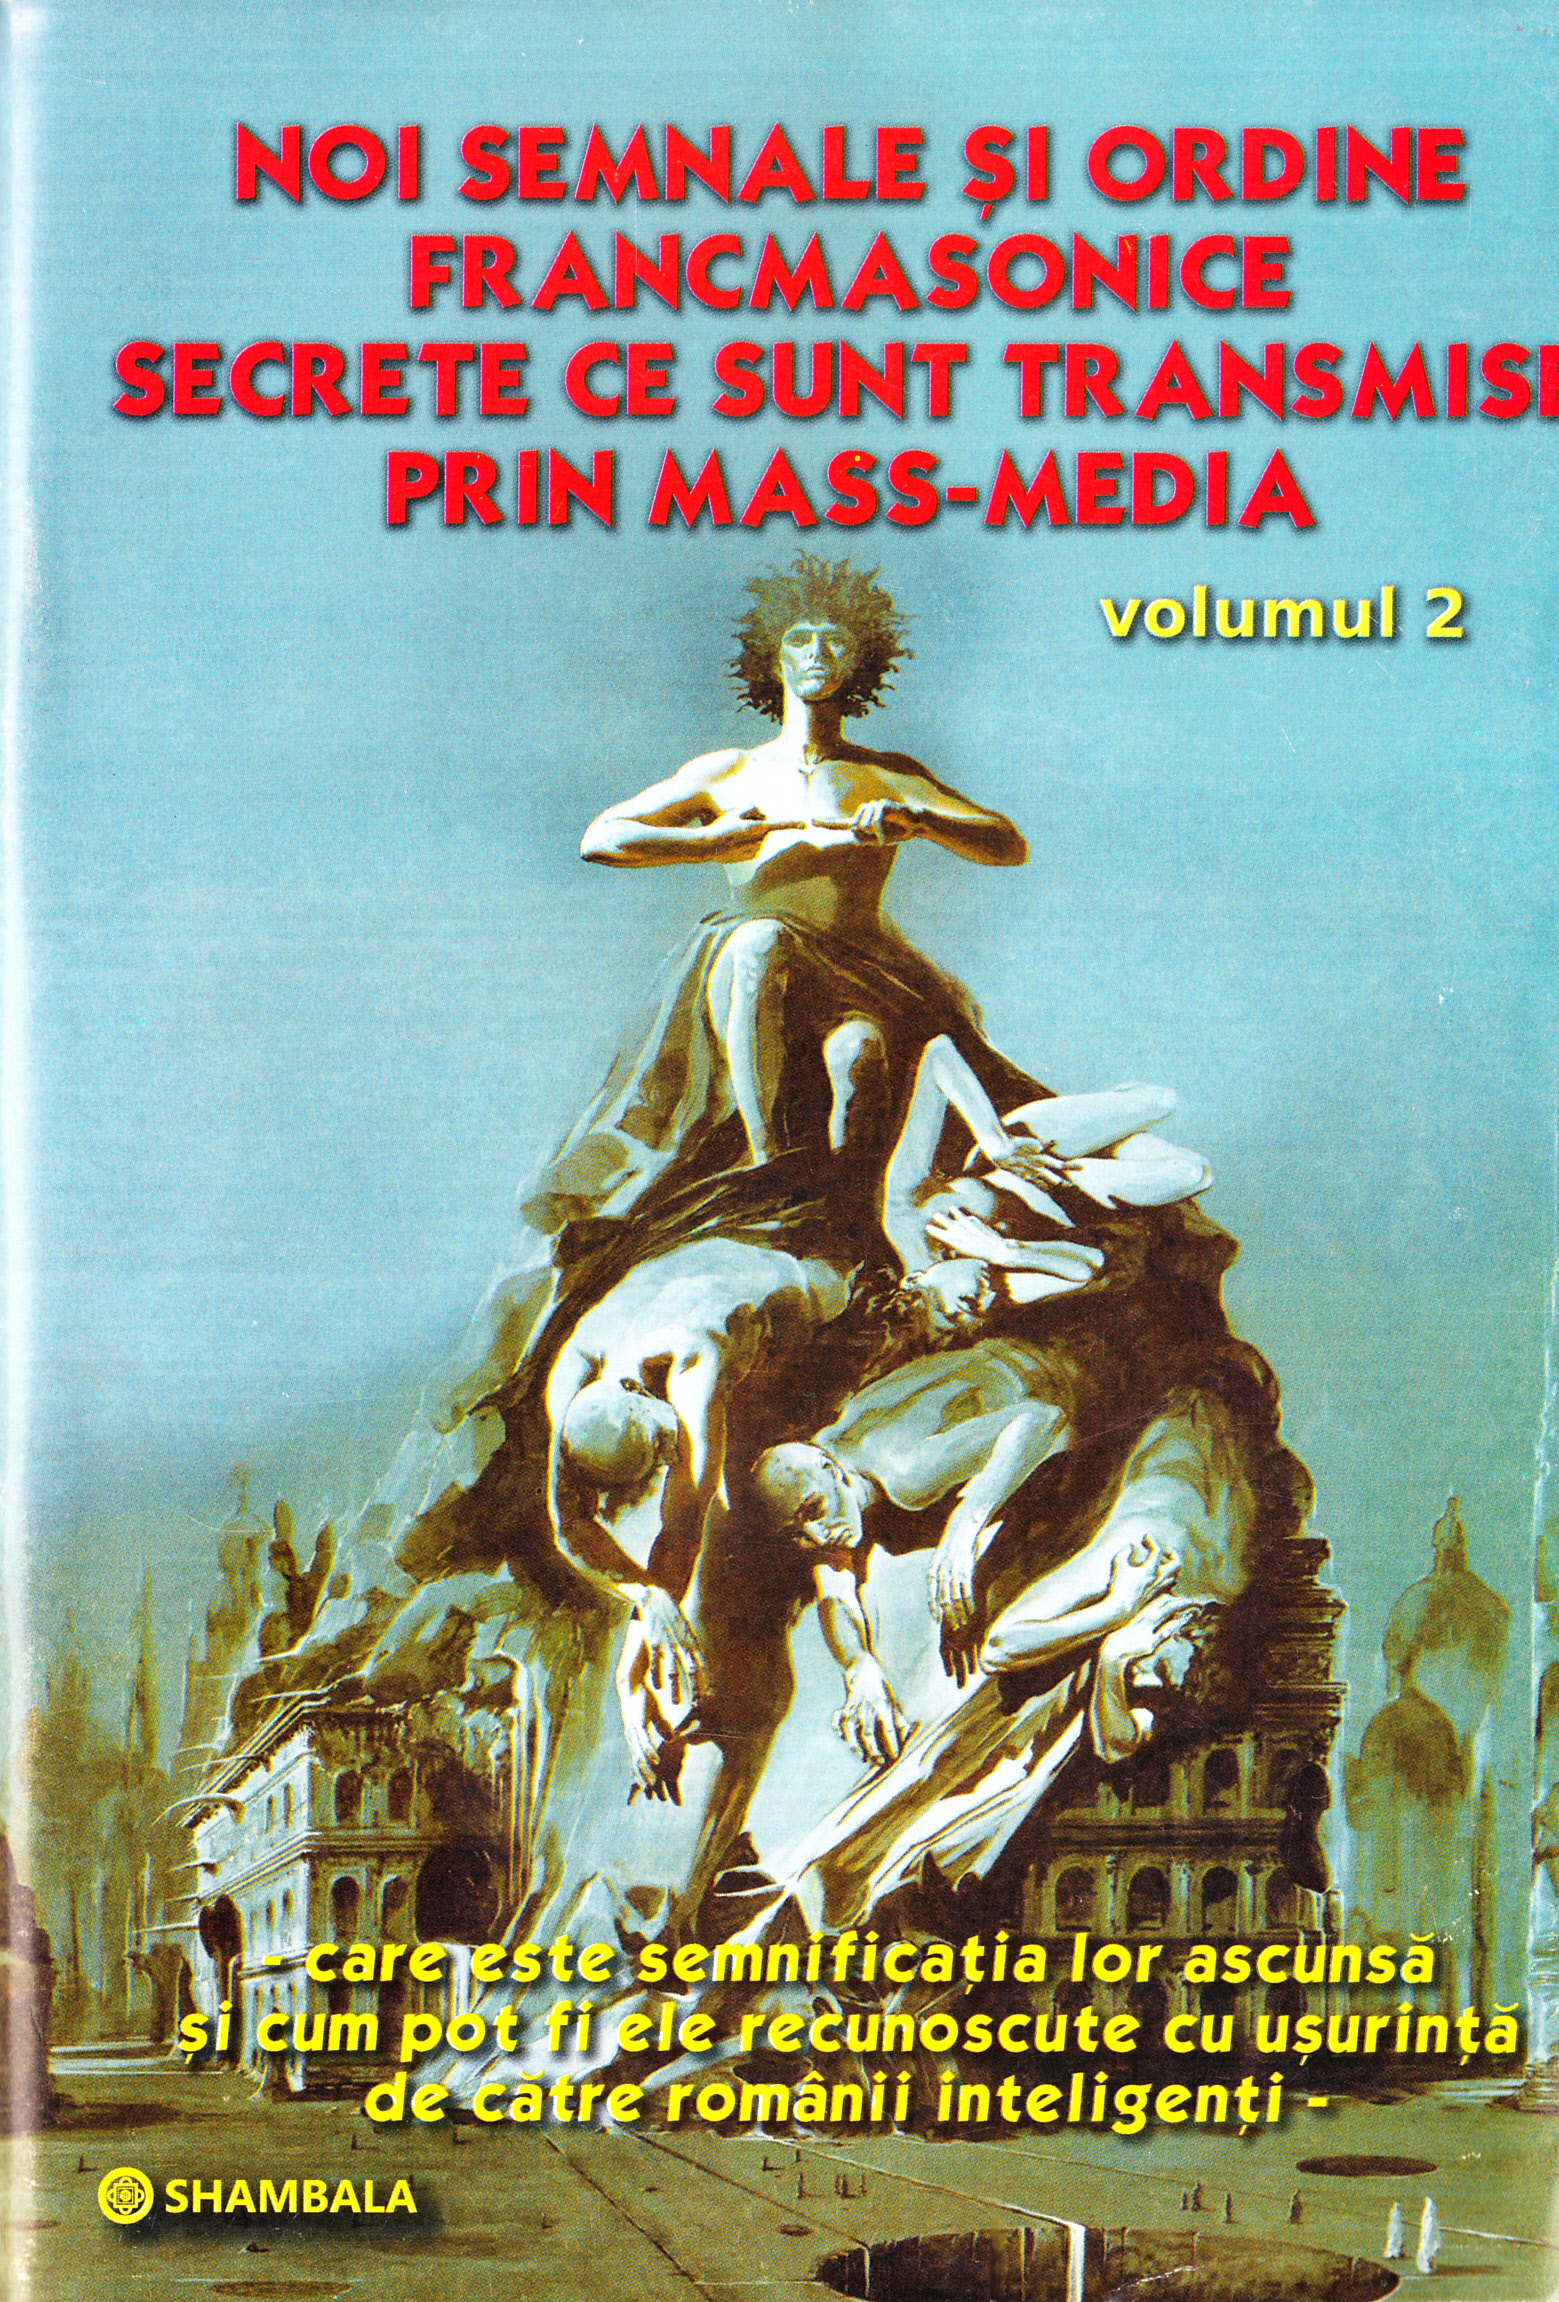 Noi semnale si ordine francmasonice secrete ce sunt transmise prin mass-media. Vol. 2